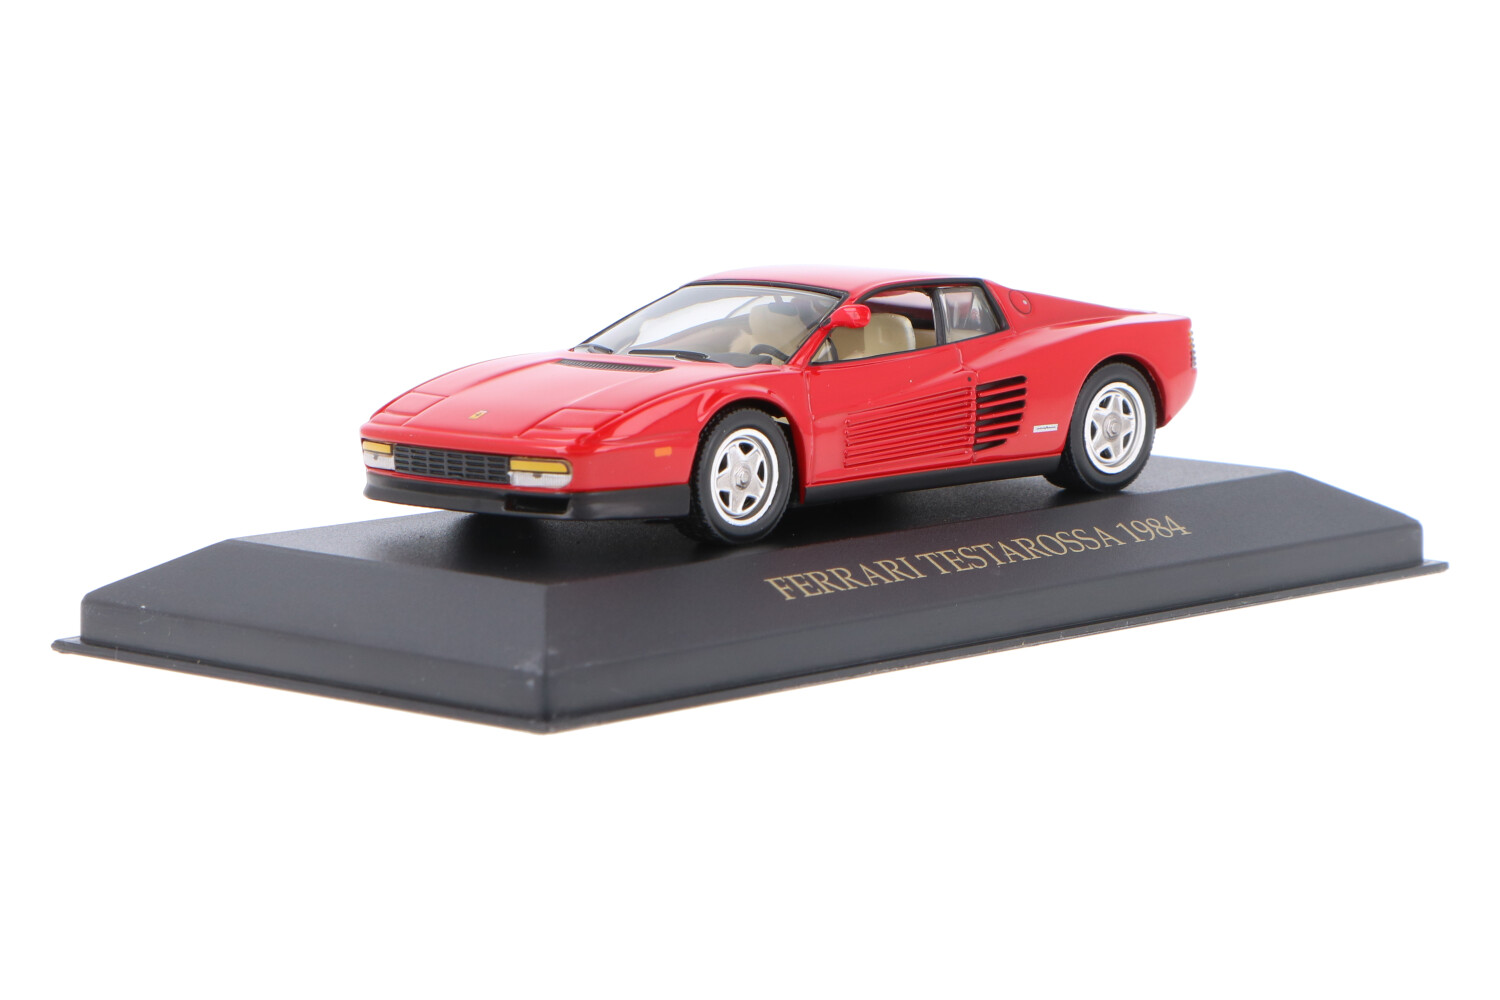 Ferrari Testarossa - Modelauto schaal 1:43